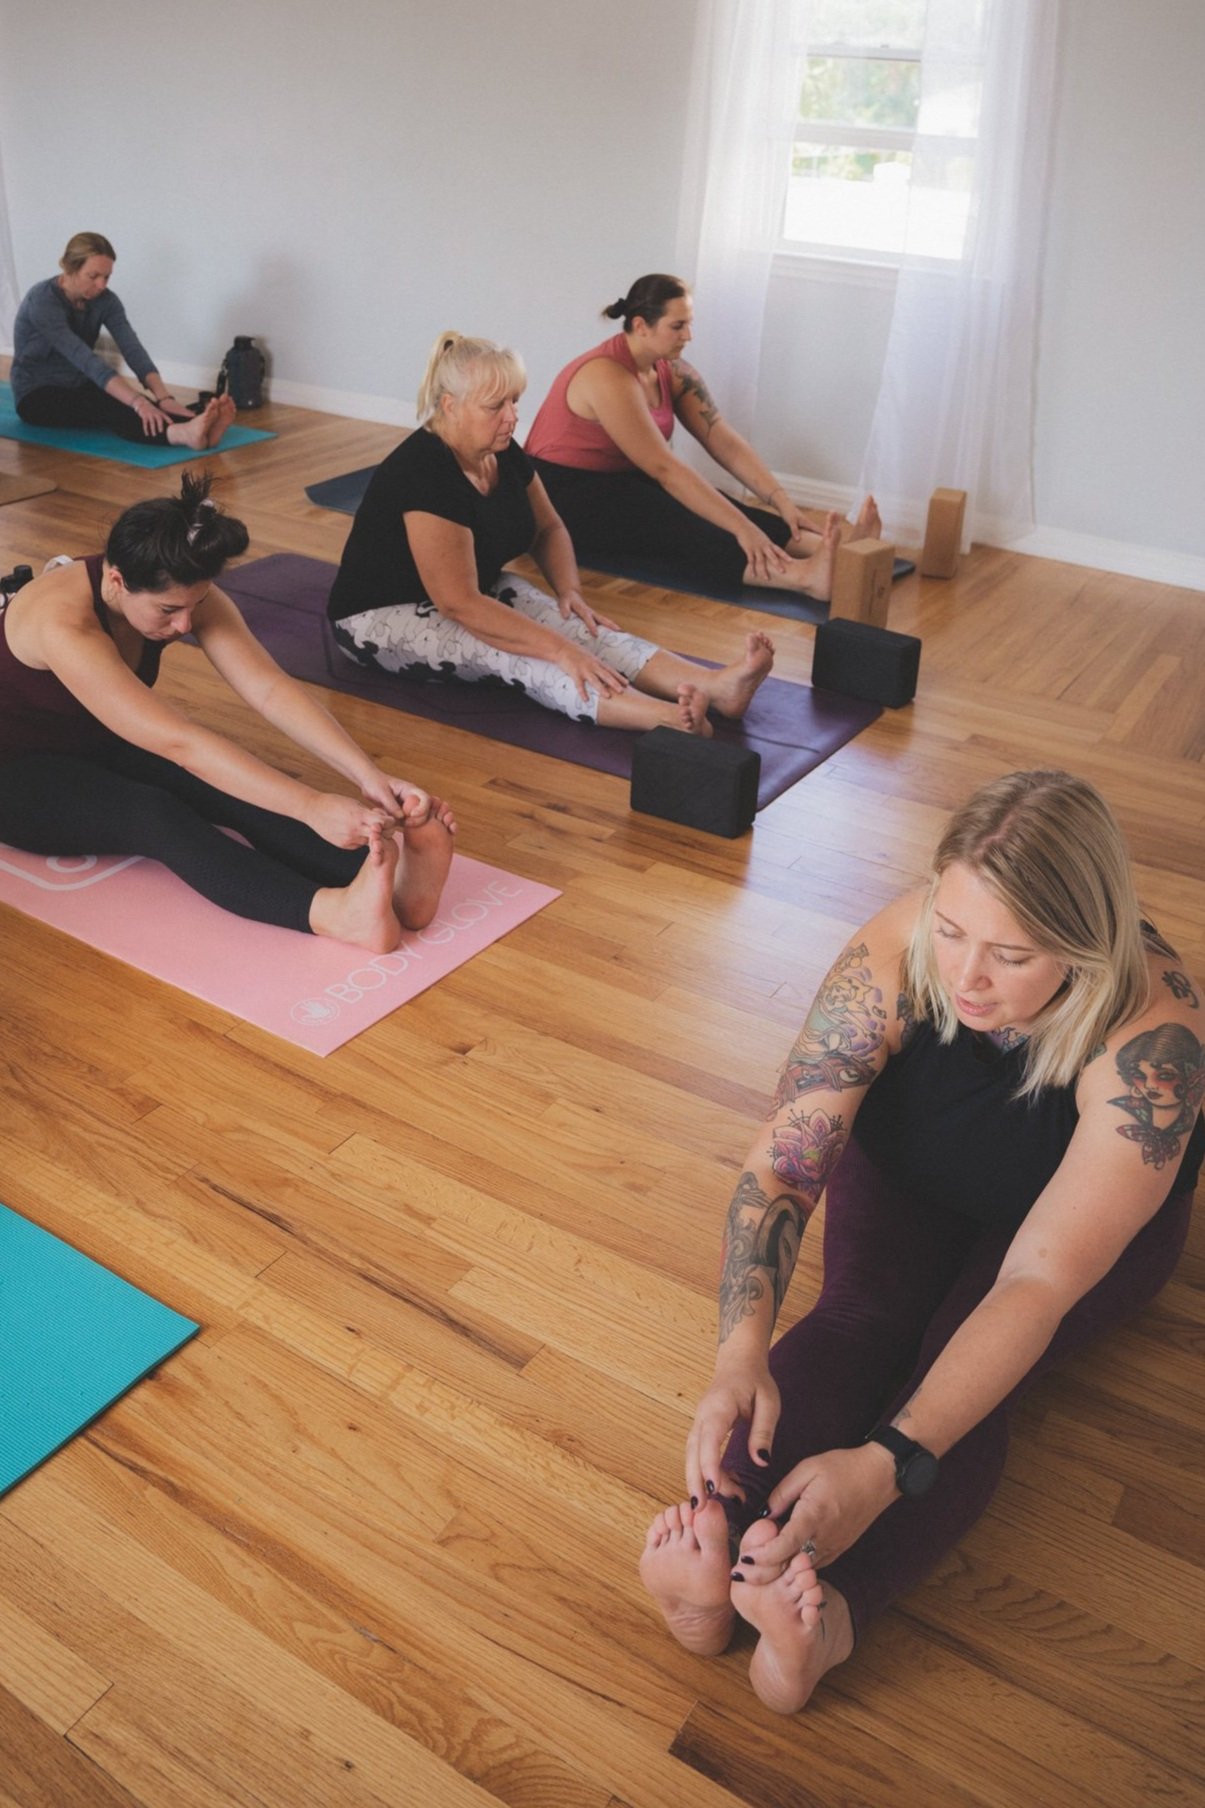 Can beginners do Ashtanga Yoga? — Lauren R. Yoga